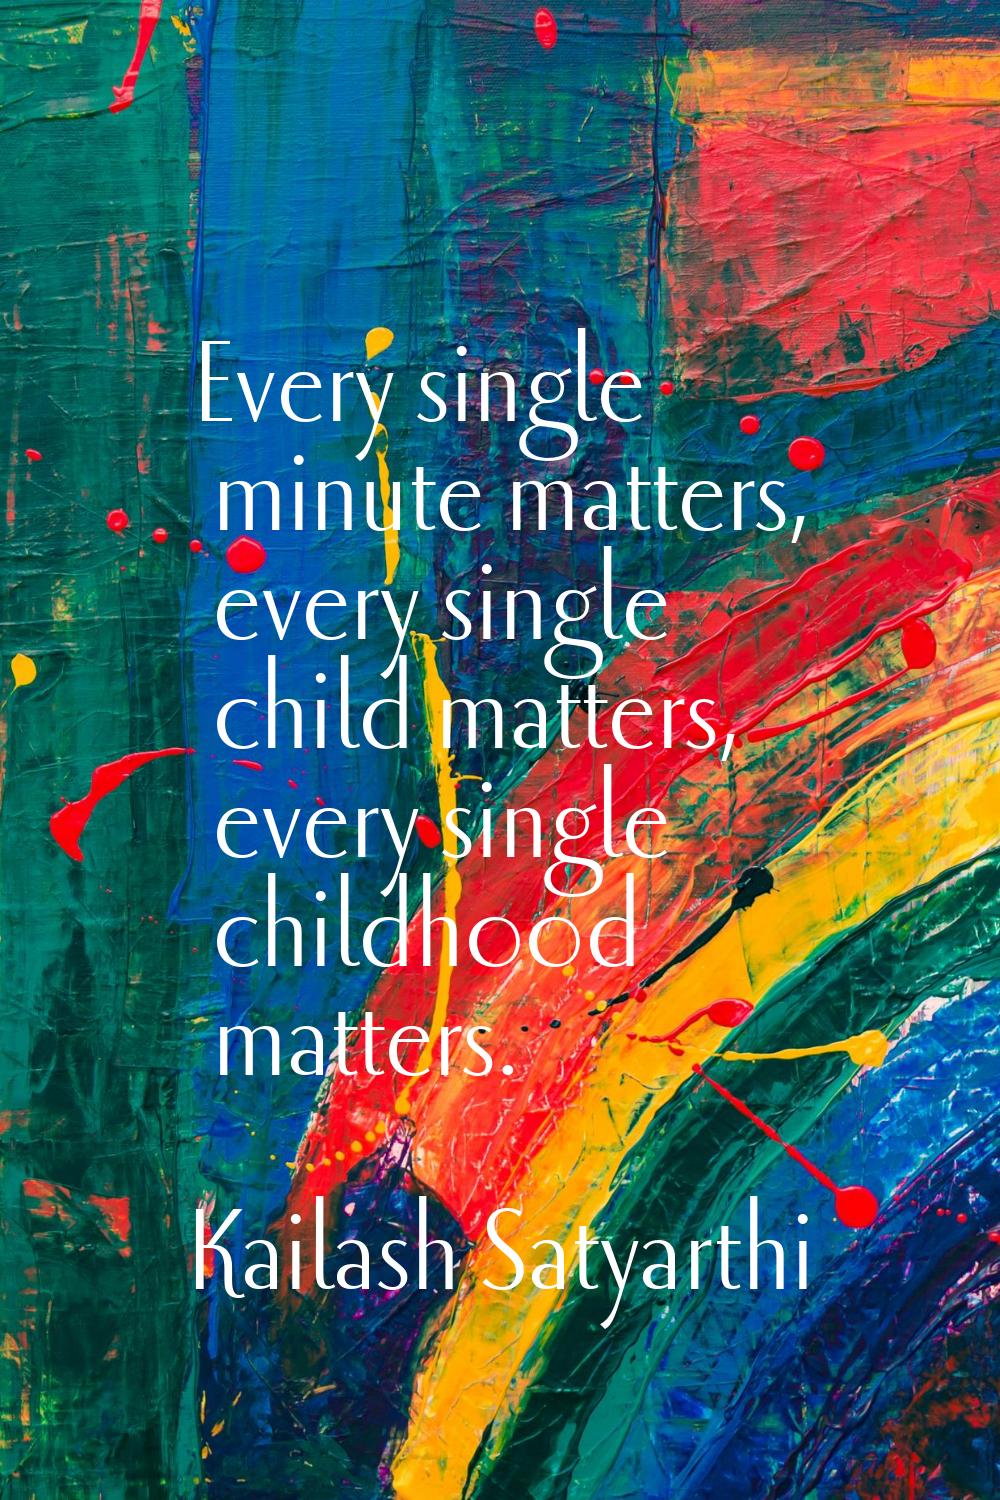 Every single minute matters, every single child matters, every single childhood matters.